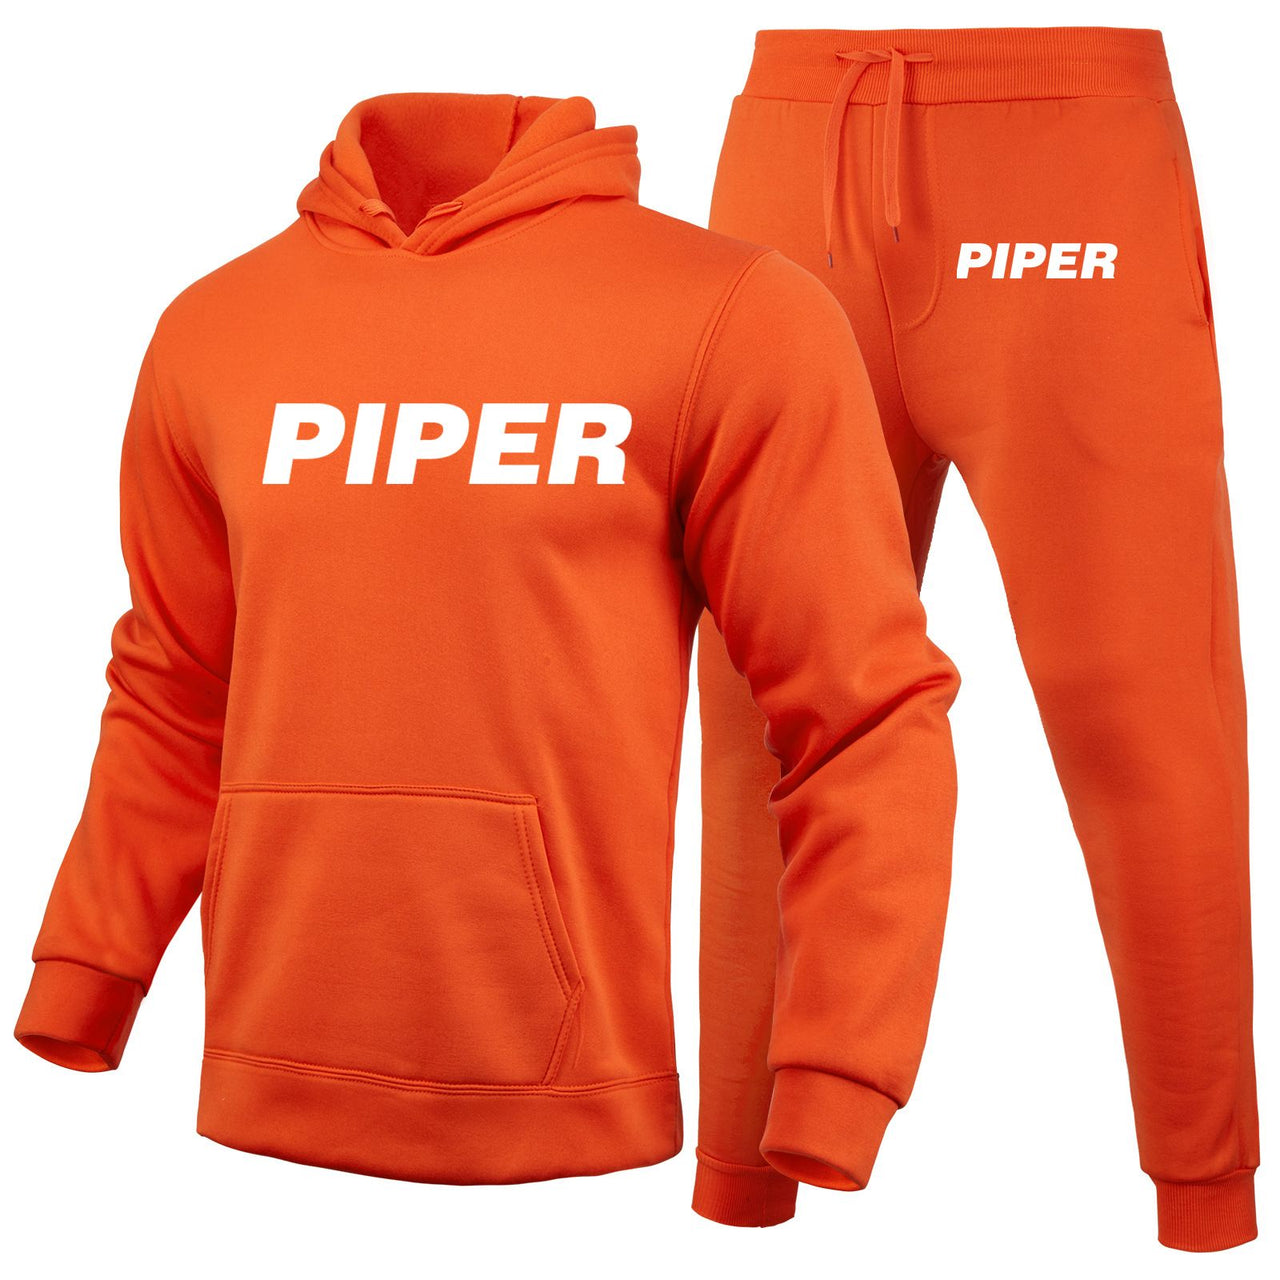 Piper & Text Designed Hoodies & Sweatpants Set